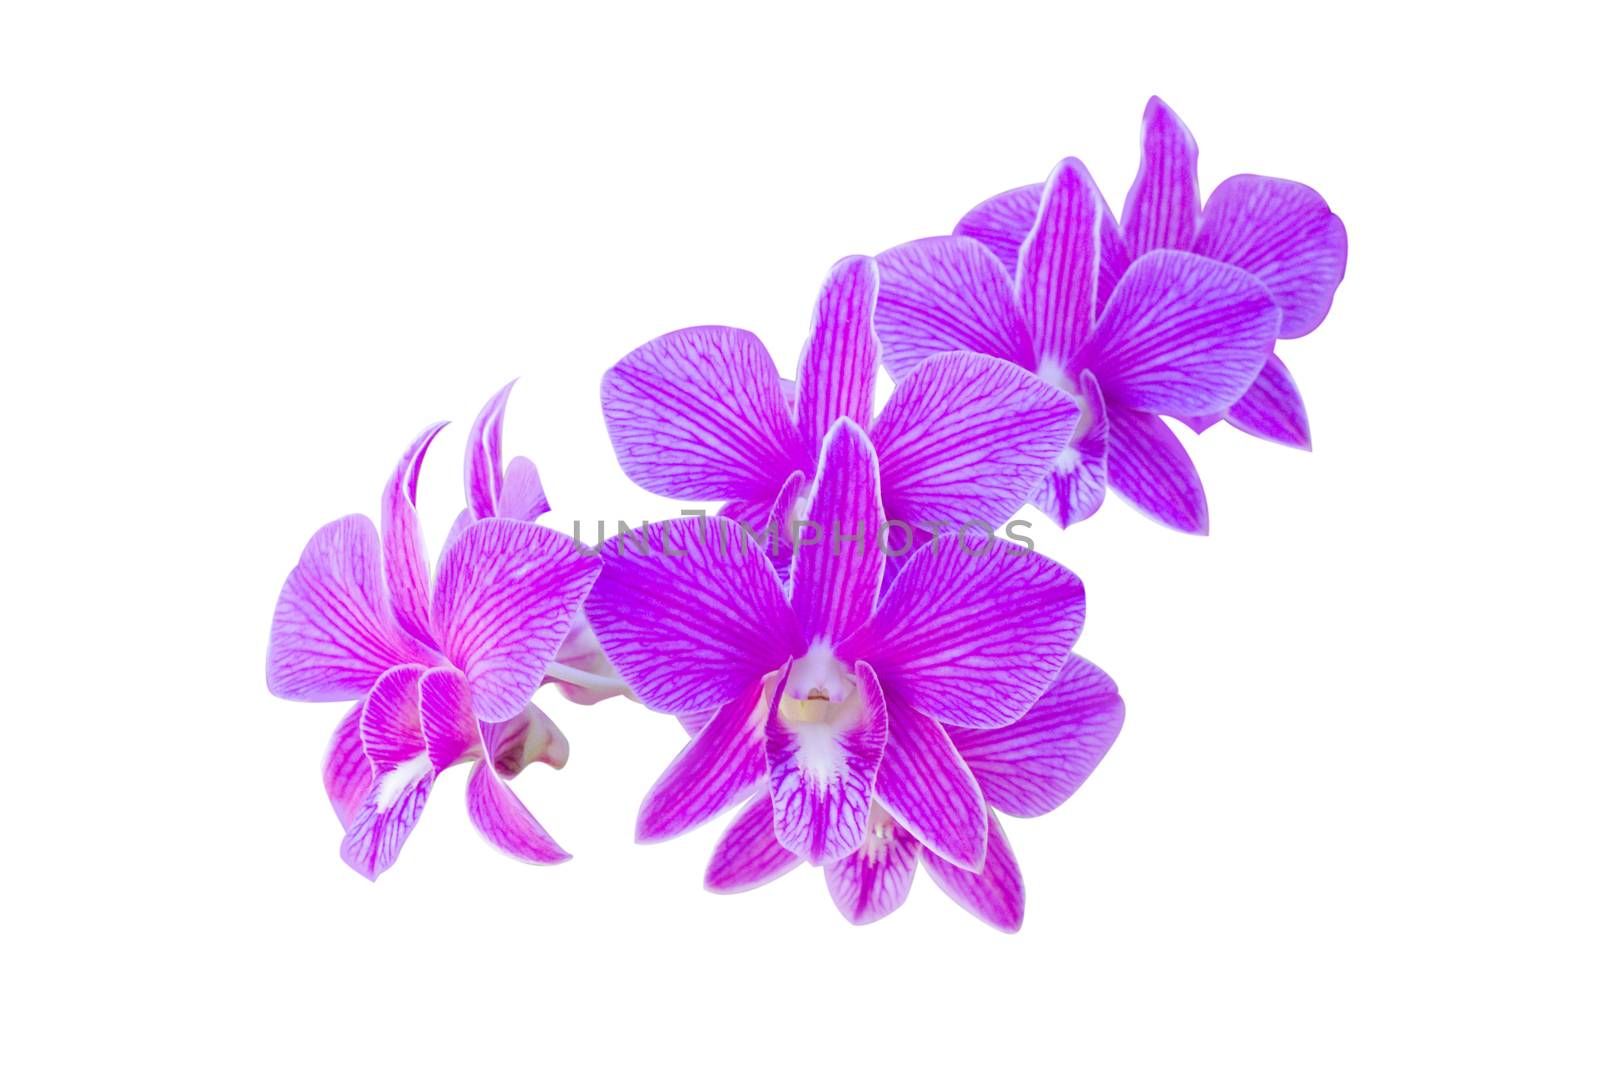 Closeup purple orchid flower on white background by pt.pongsak@gmail.com